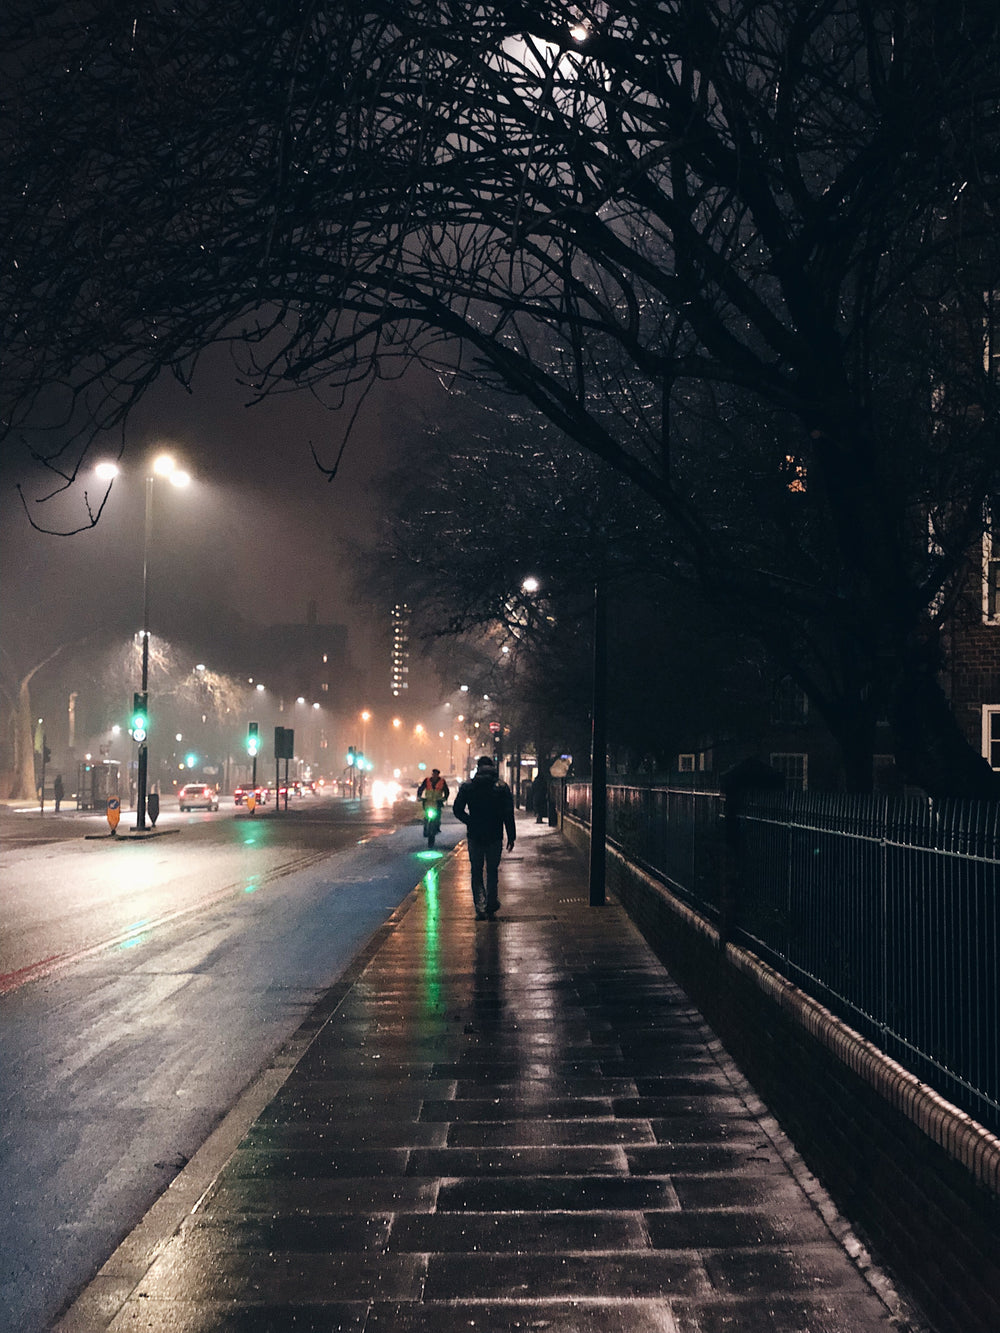 midnight stroll through the city